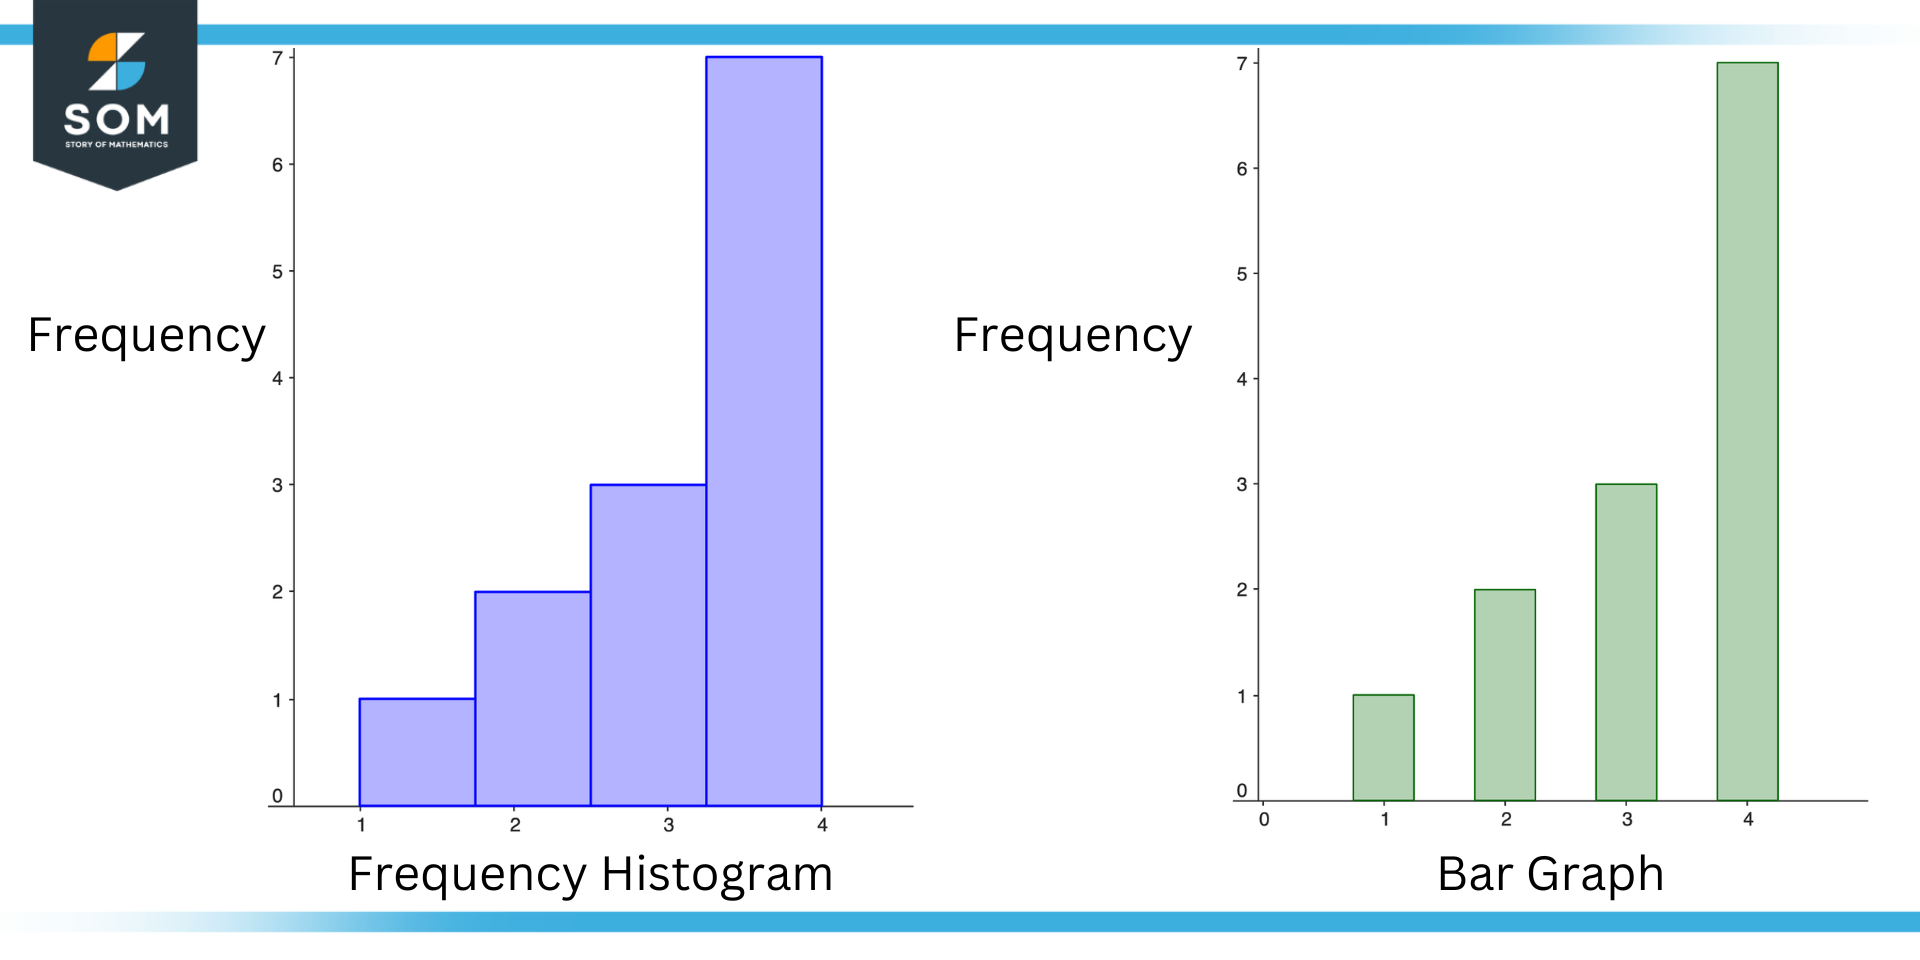 Frequency Histogram vs Bar Graph